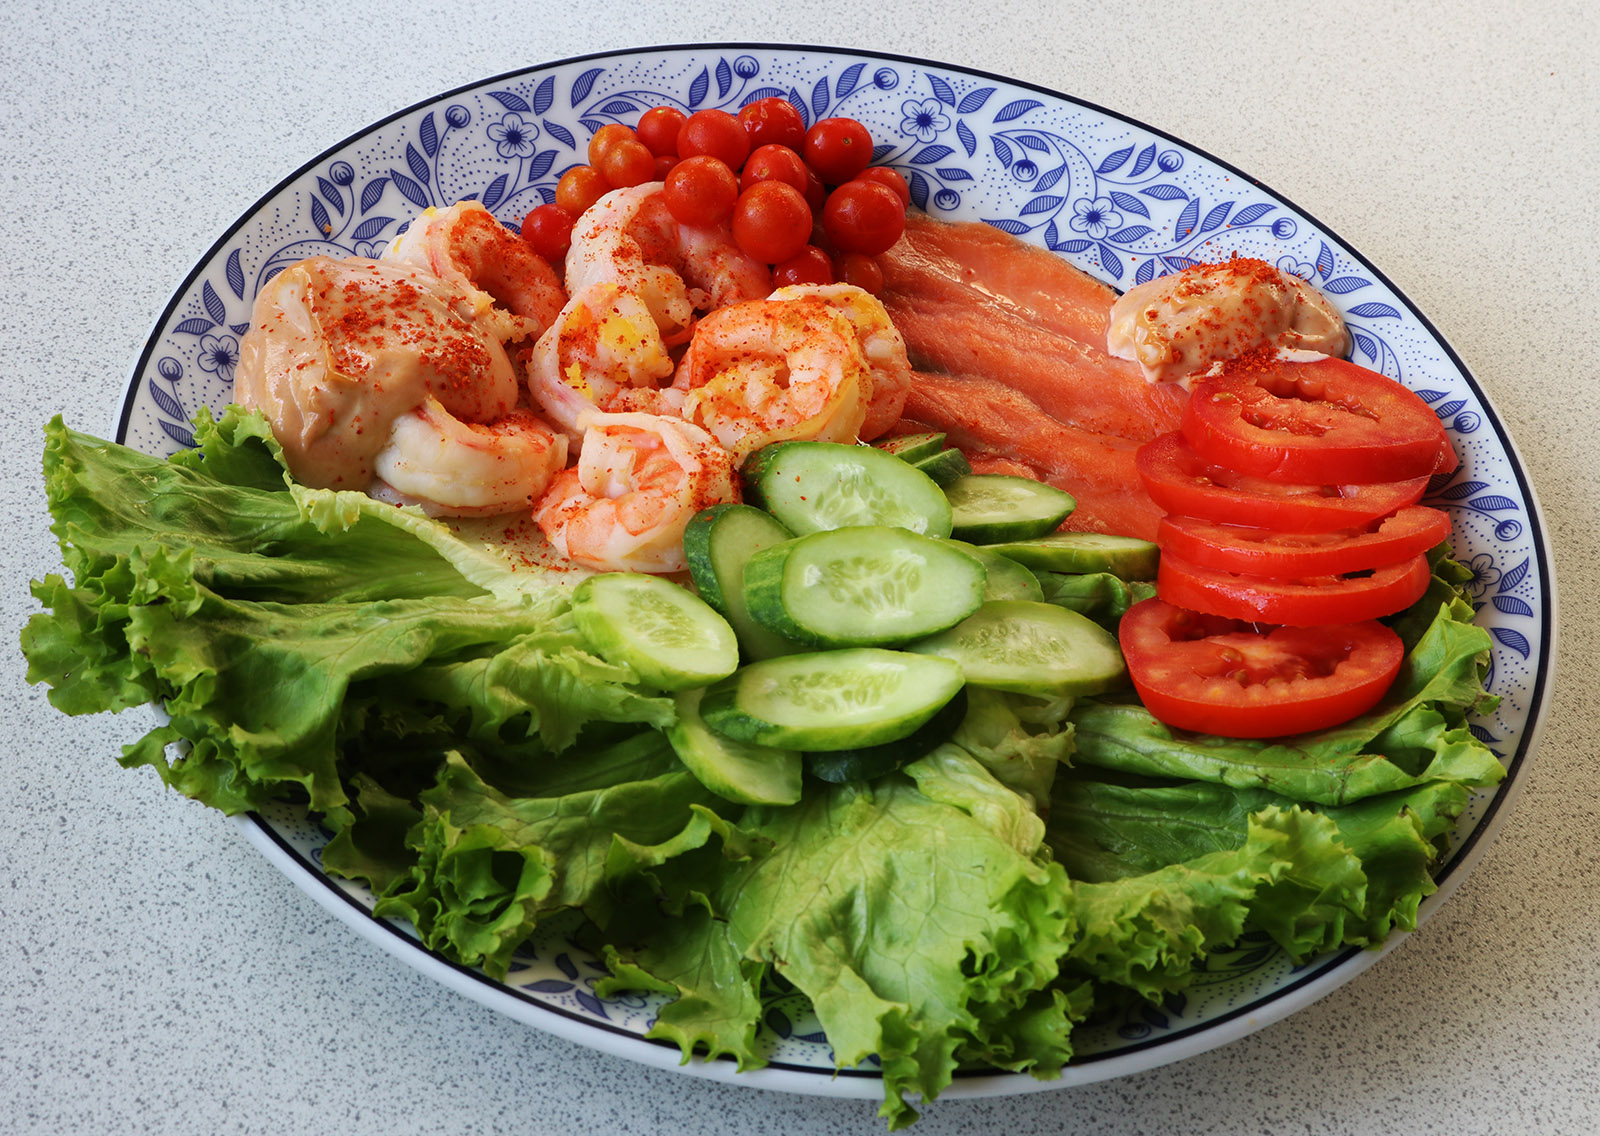 Prawn and salmon salad 2 s.jpg